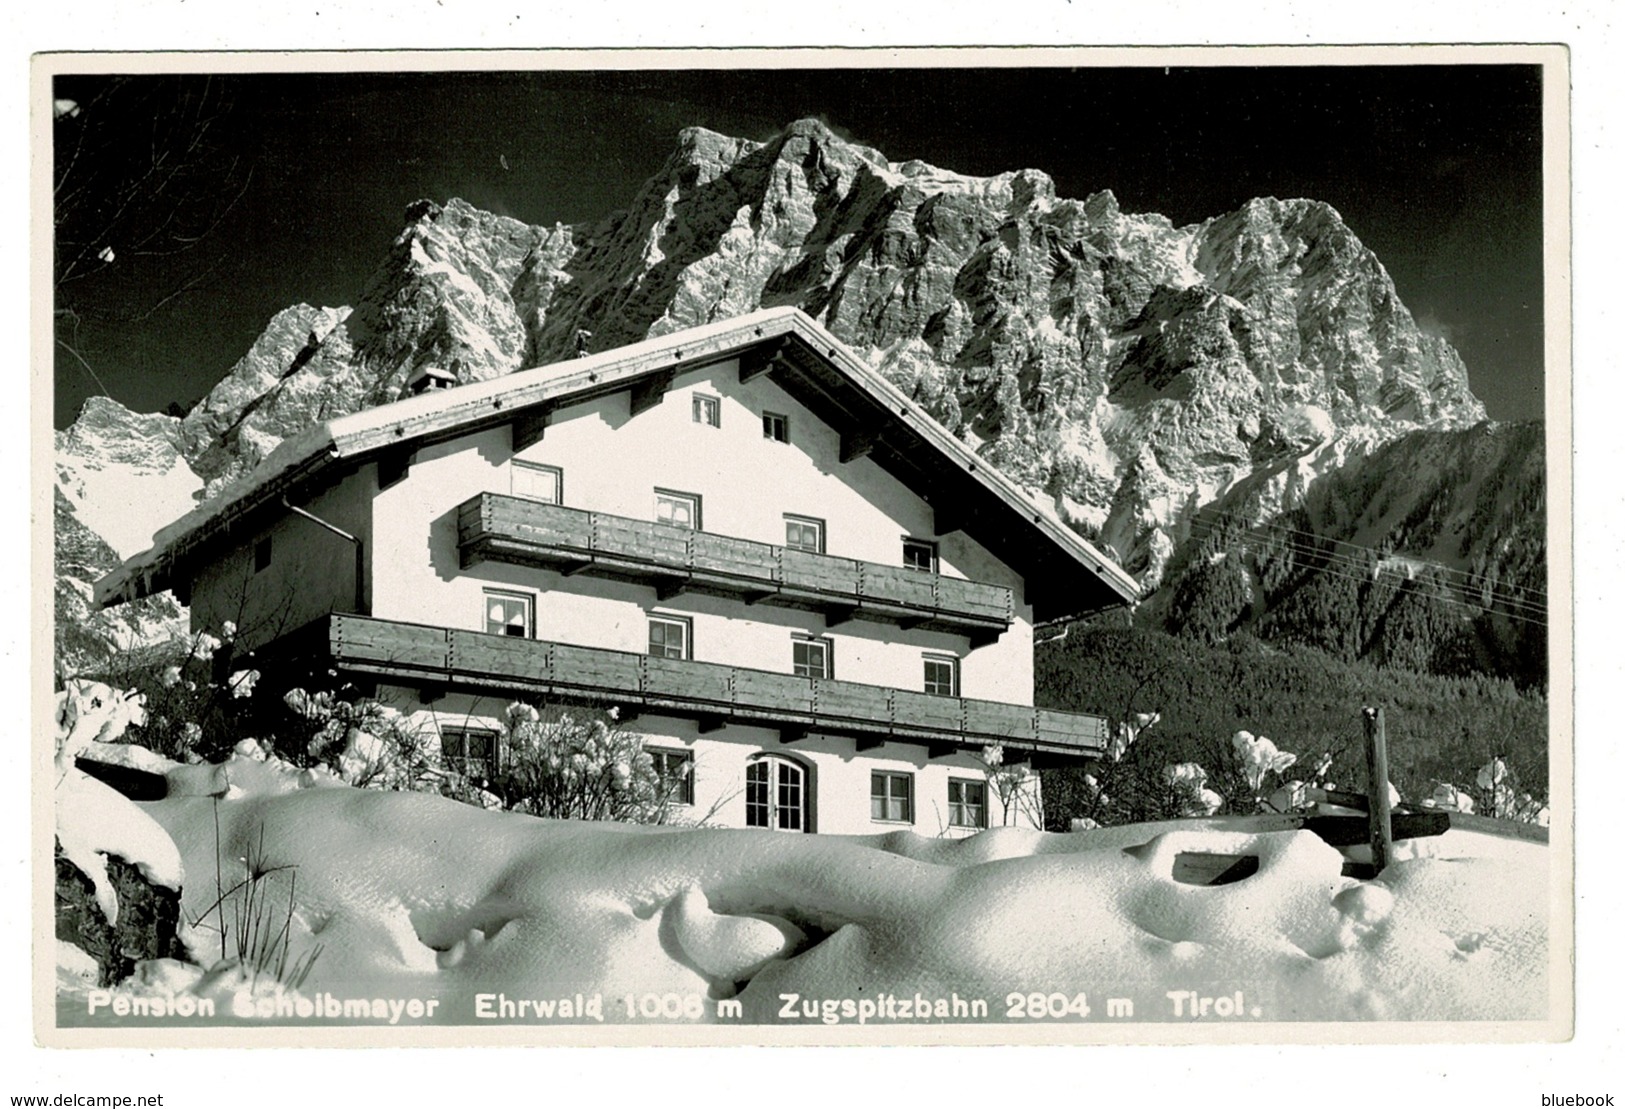 Ref 1391 - Real Photo Postcard - Pension Scheibmayer Ehrwald - Tirol Tyrol Austria - Ehrwald